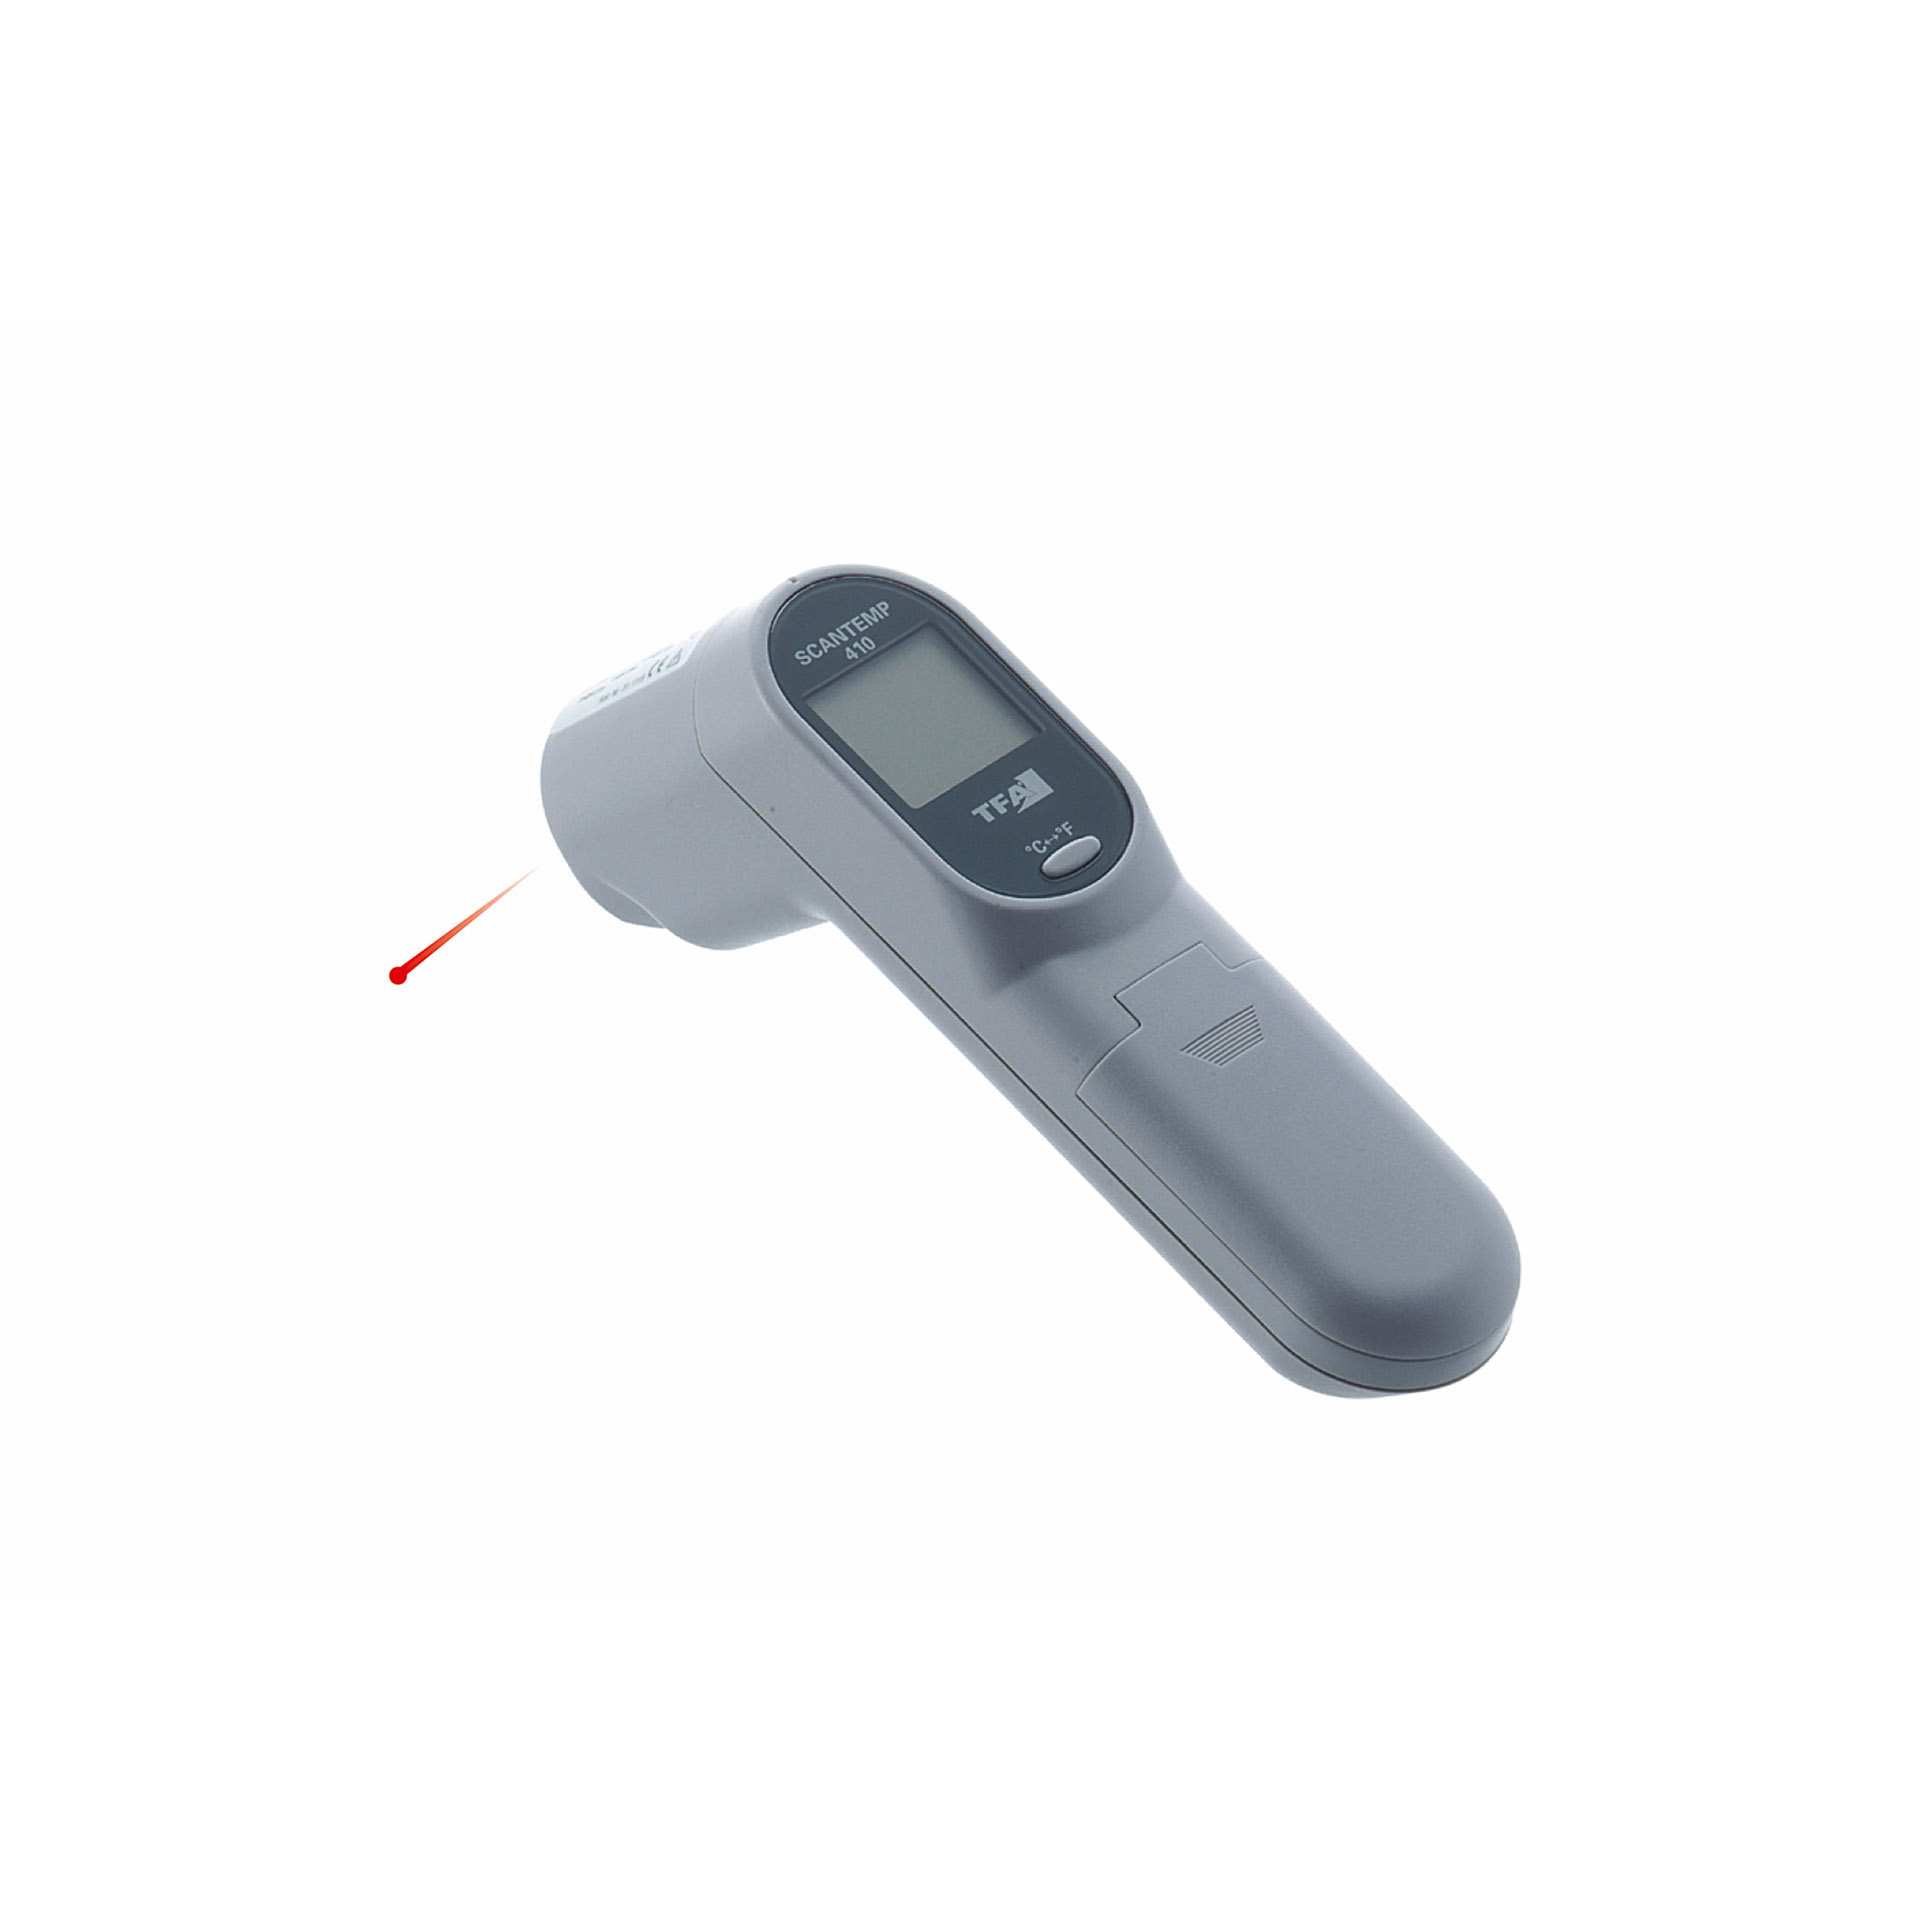 Infrarot-Thermometer - - 33 / + 500°C - Abm. 18,0 x 11,8 x 6,0 cm - 160019-C